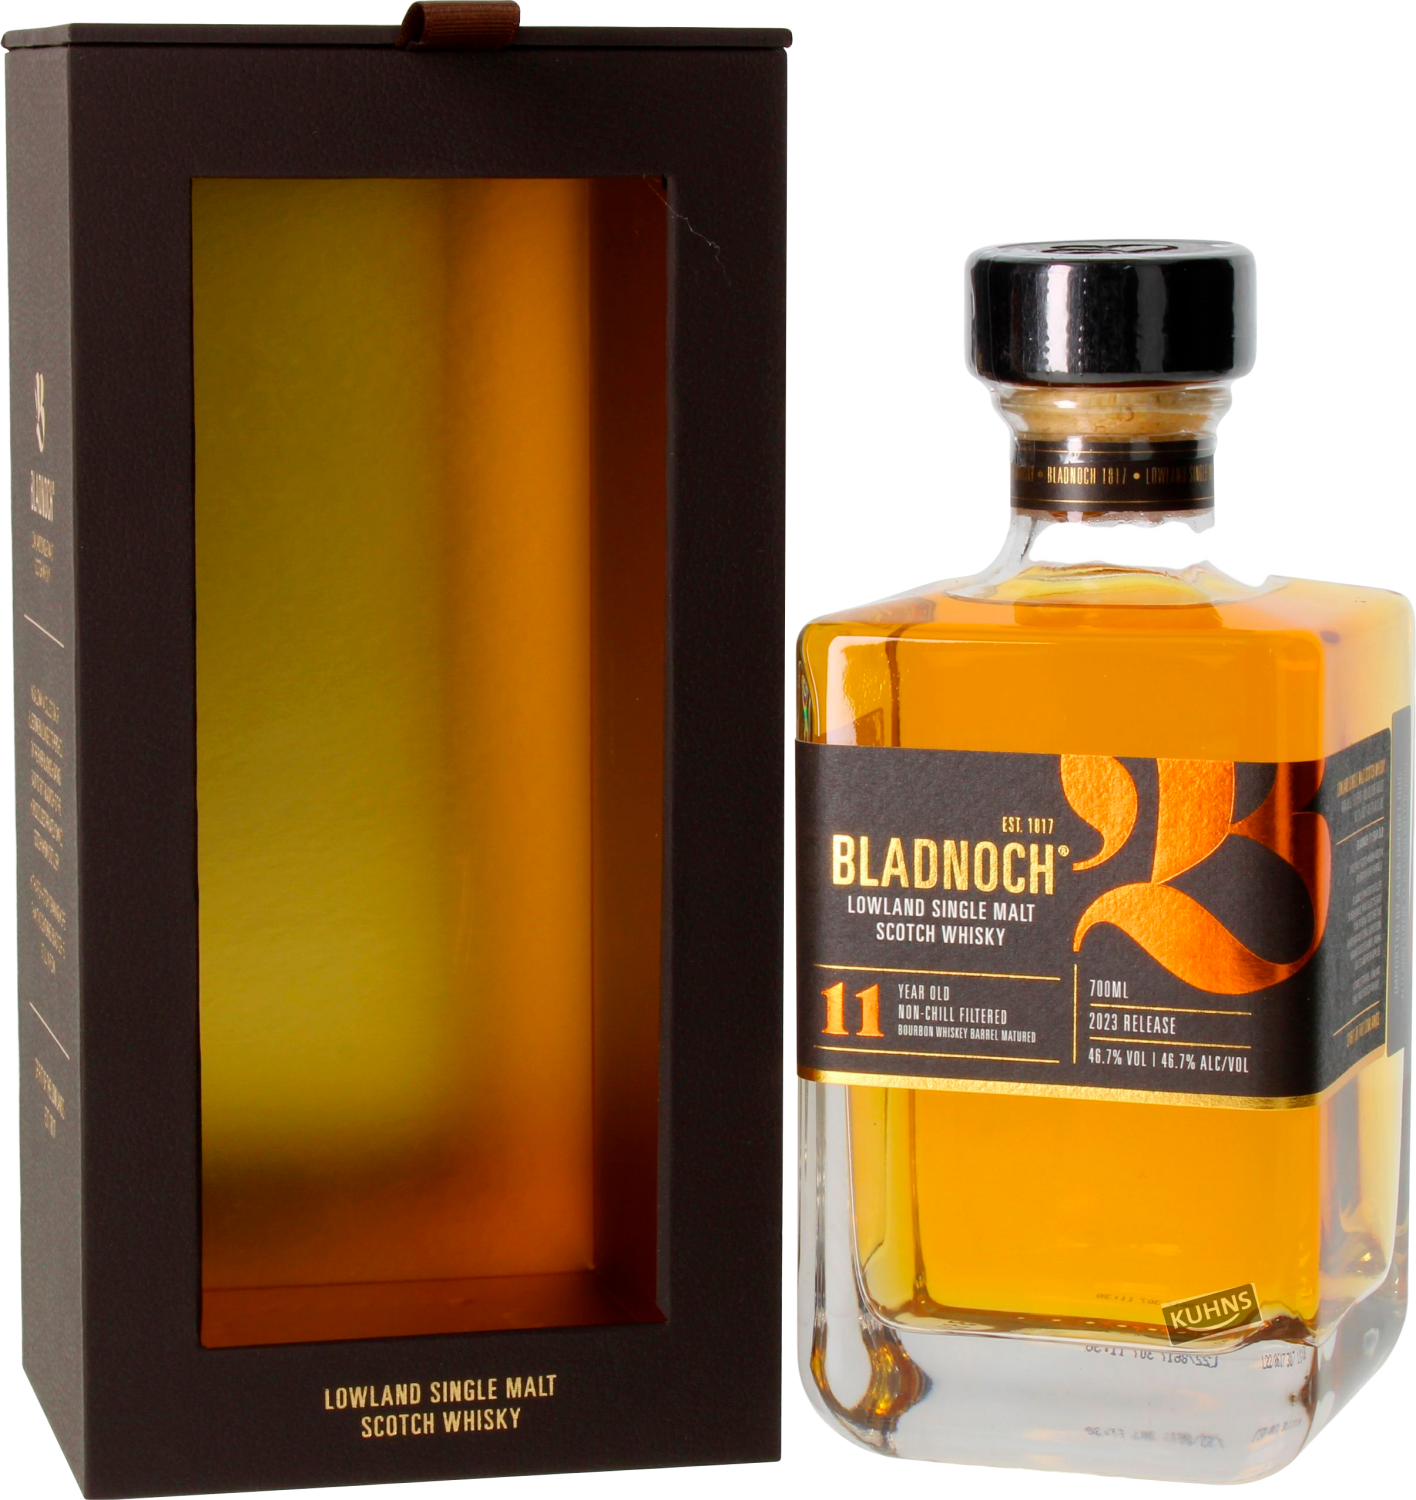 Bladnoch 11 Years Old Single Malt Scotch Whisky (gift box) glenfiddich 18 years old single malt scotch whisky gift box